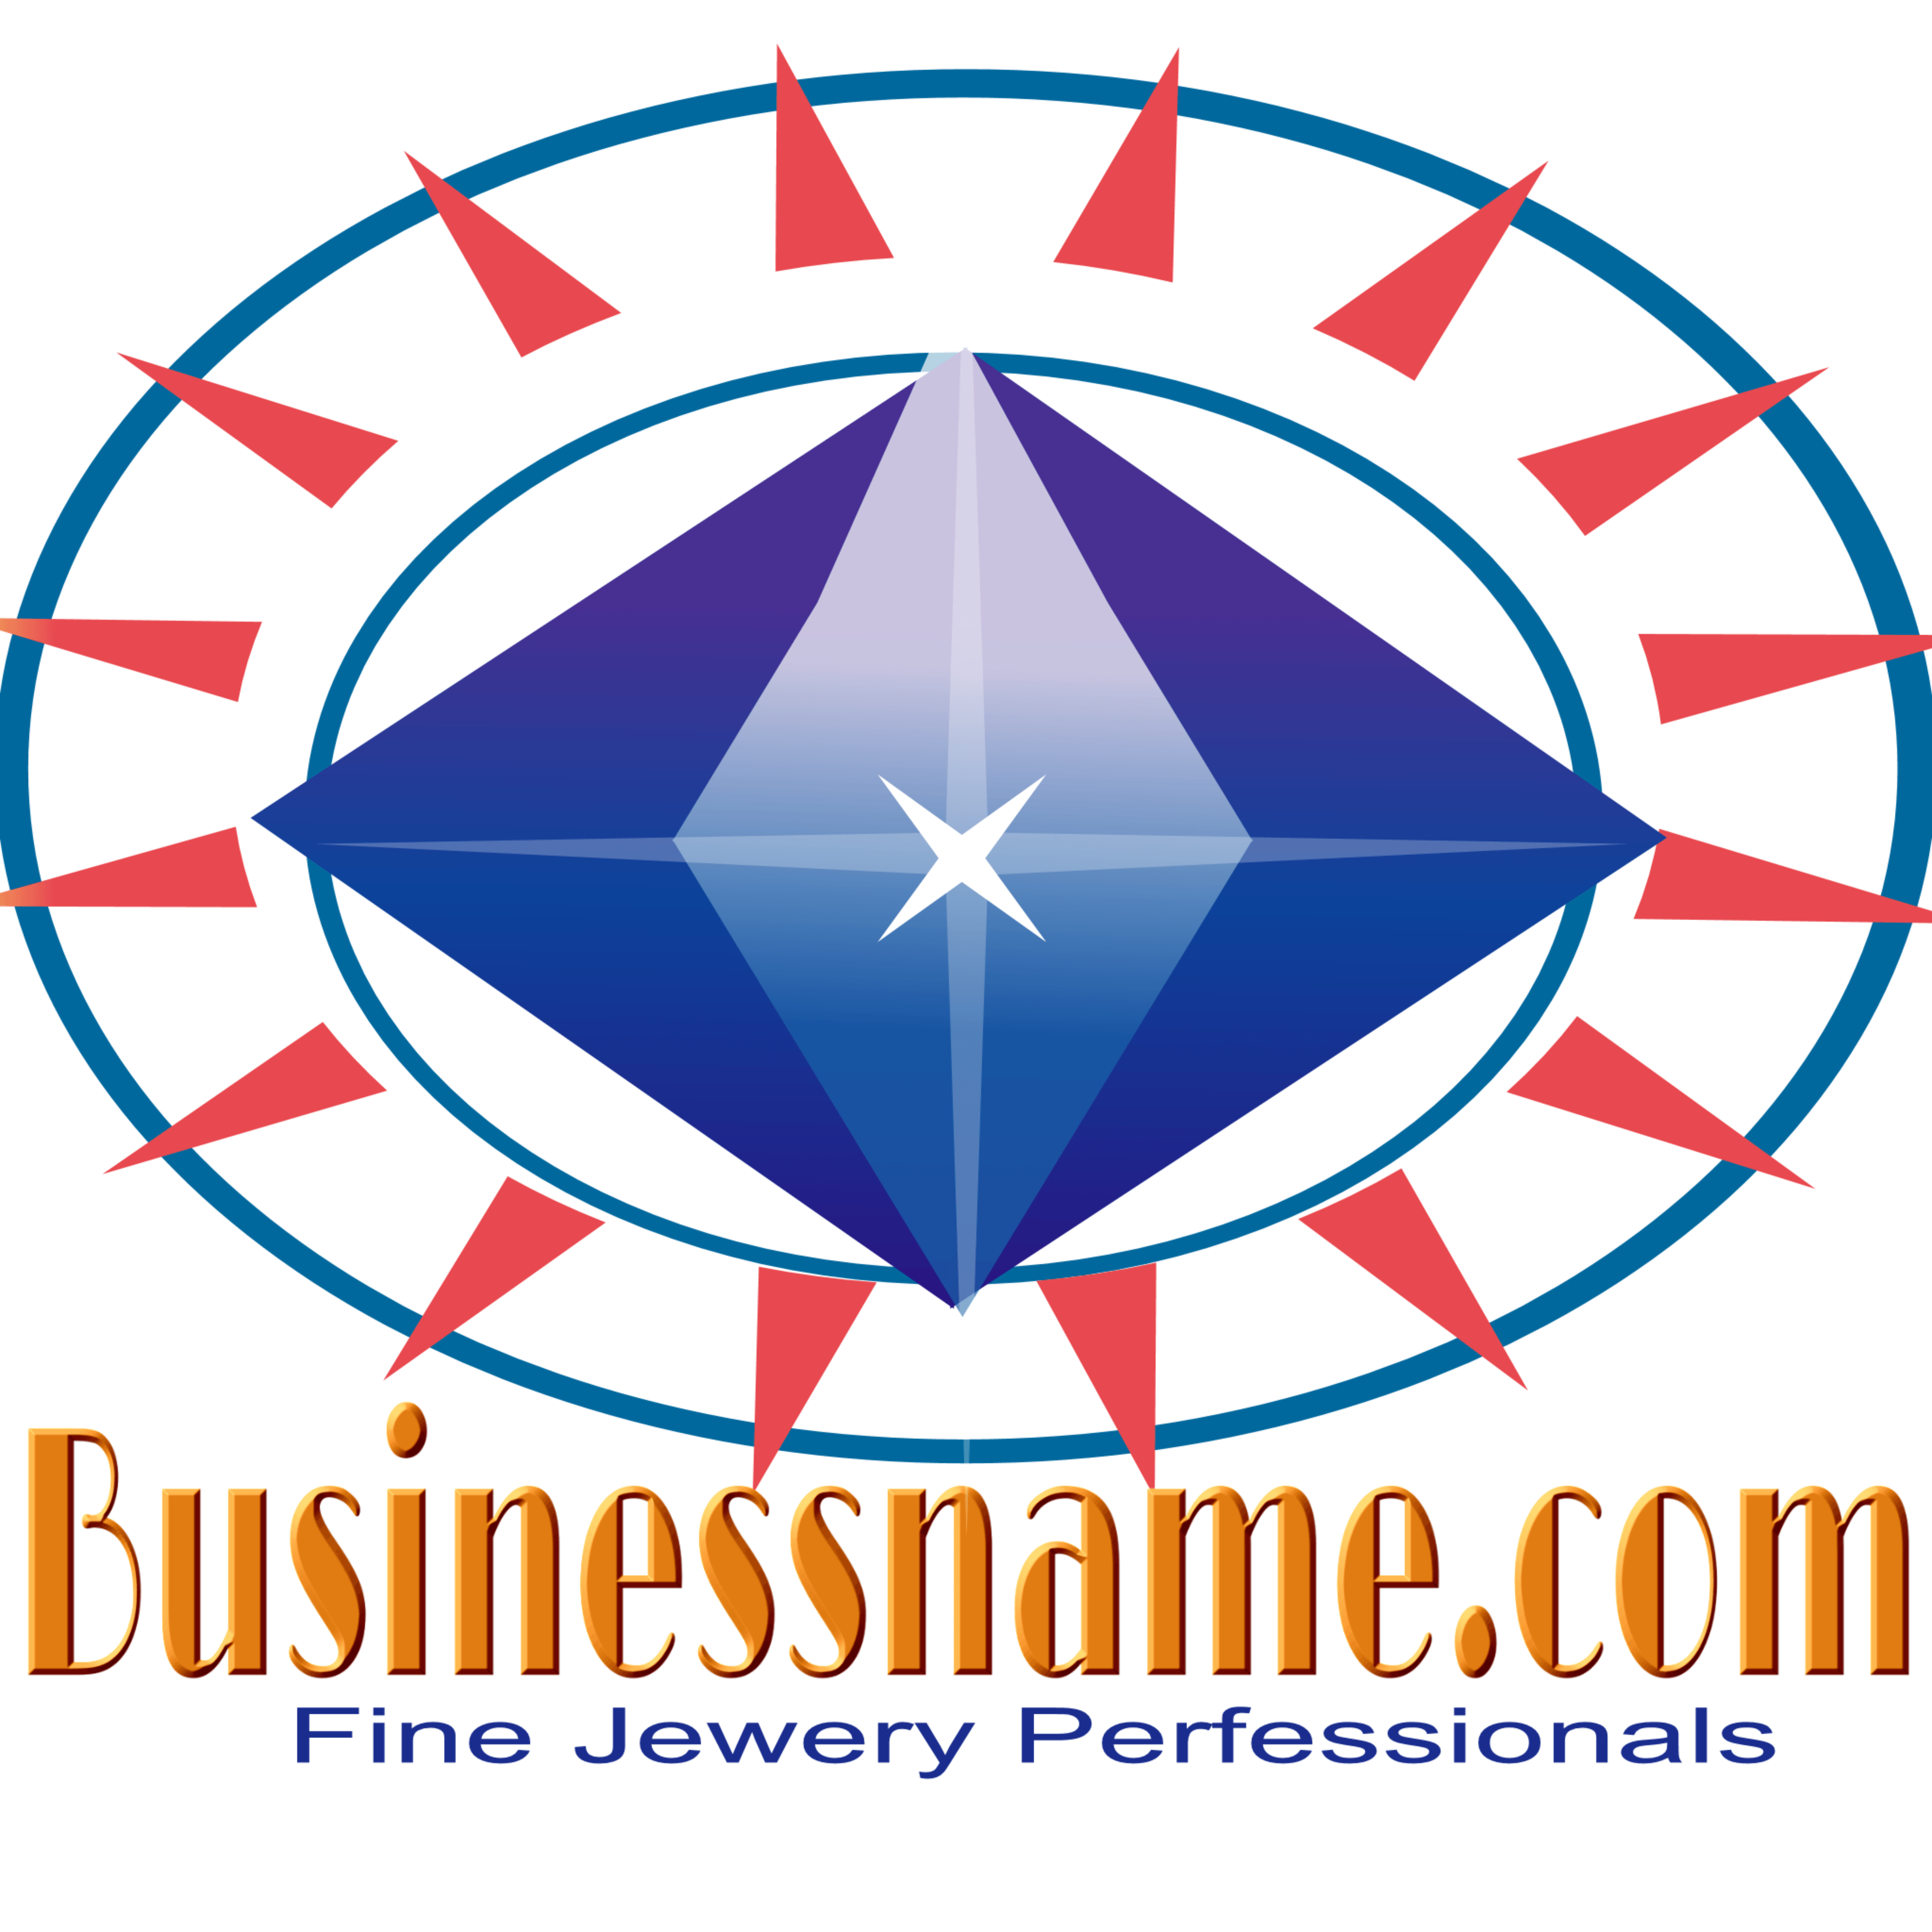 Sun Diamond Logo - A Diamond logo with sun rays like halo good for any jewelery ...